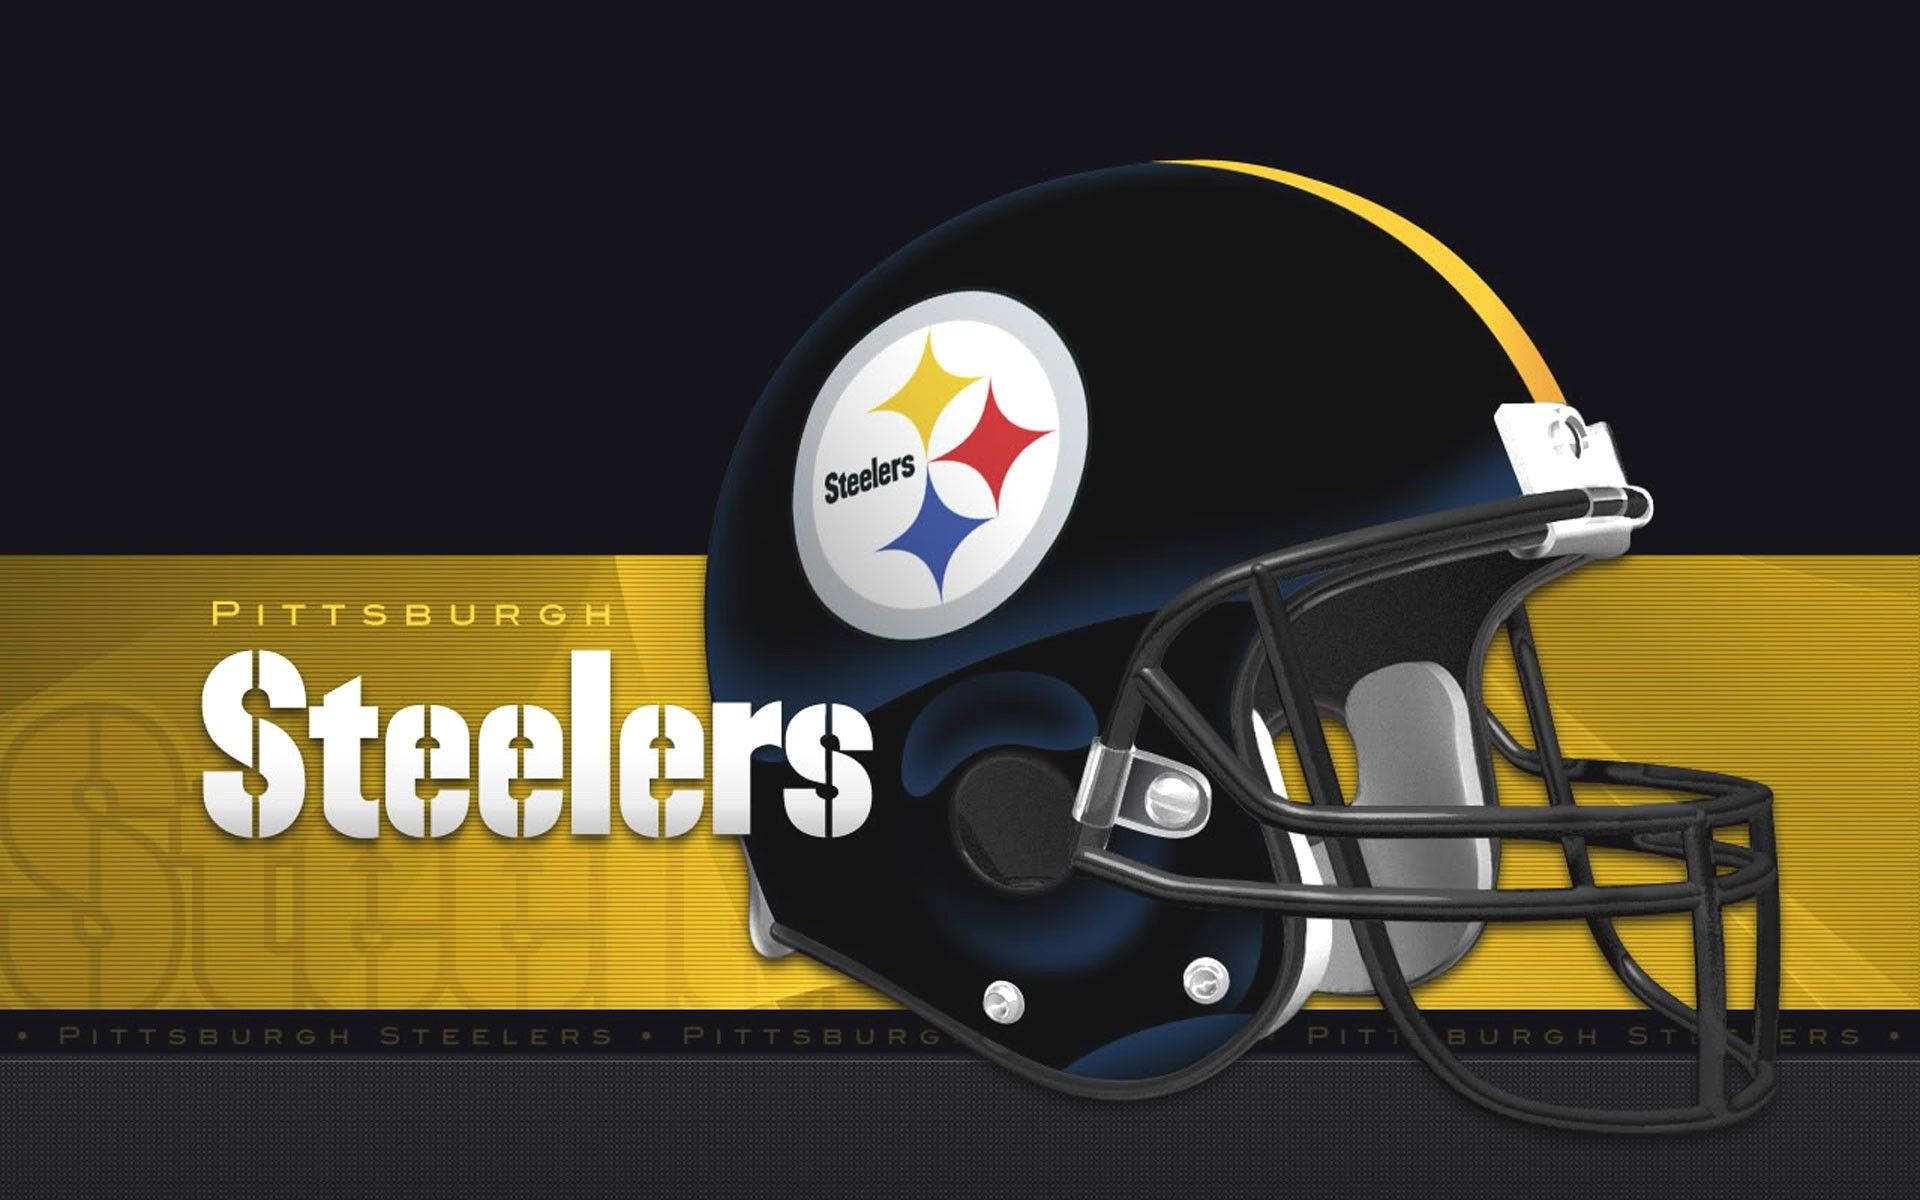 Pittsburgh Steelers Football Helmet Art Background